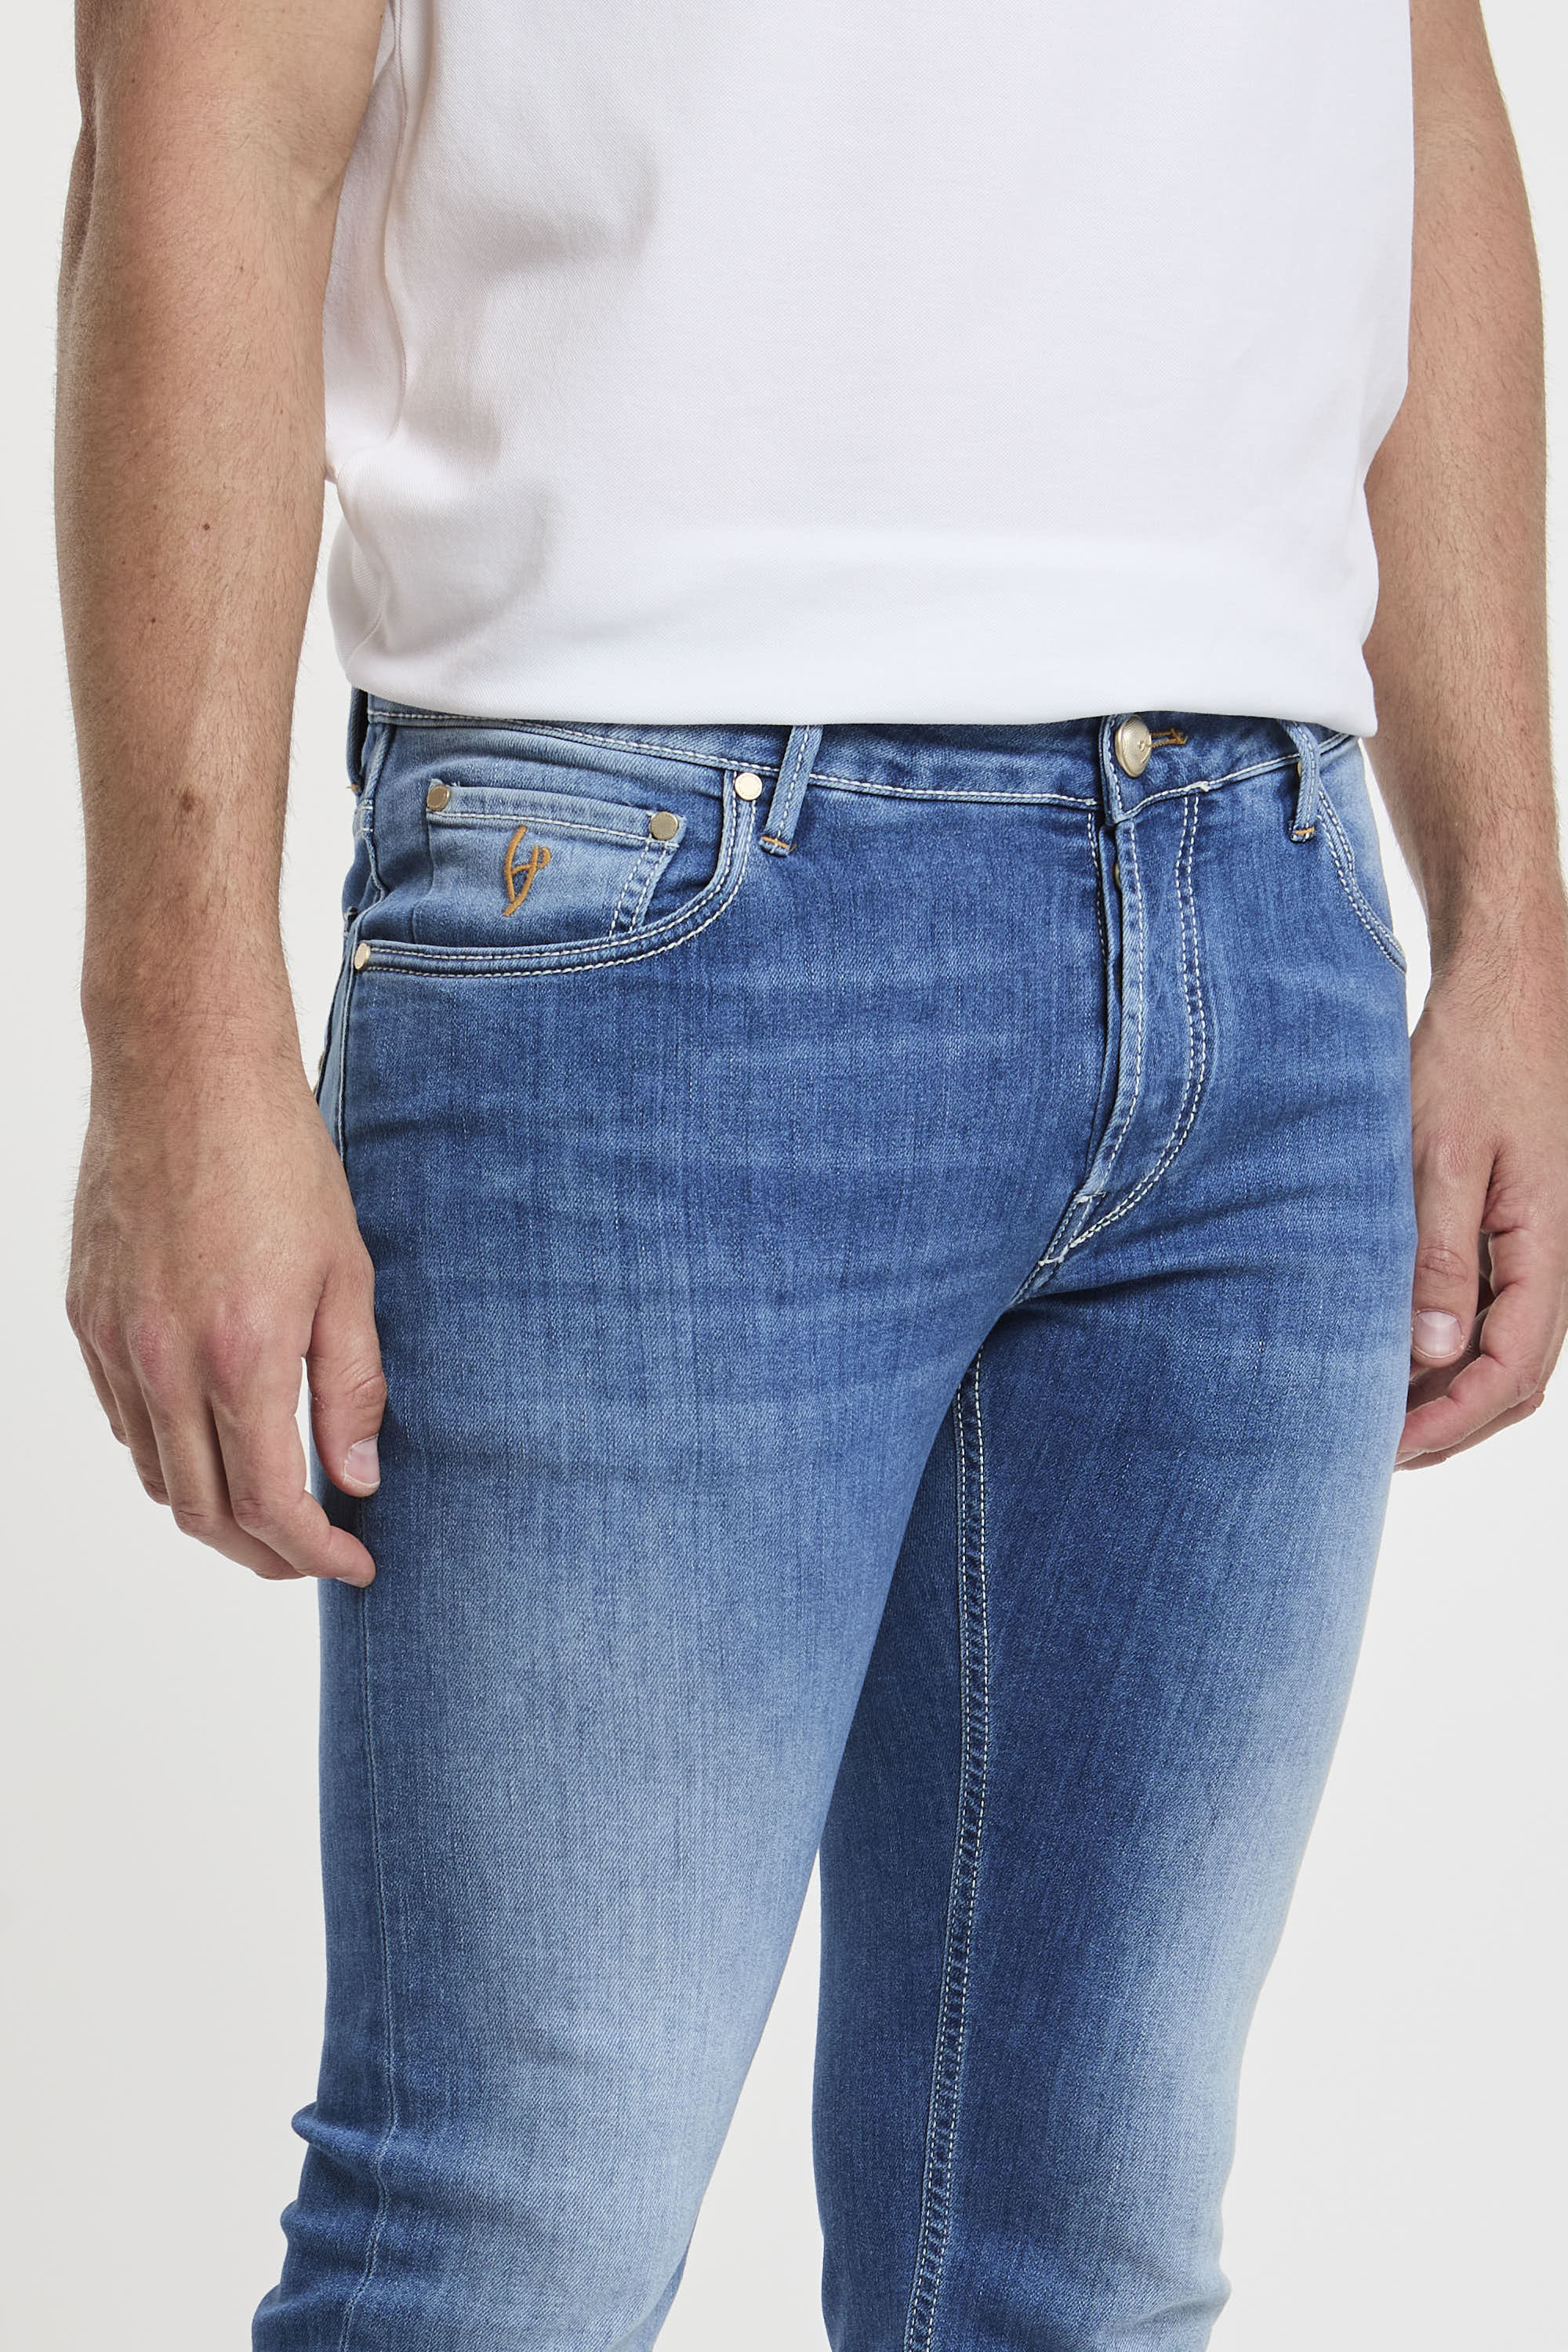 Handpicked Jeans Orvieto Cotton/Elastomultiester Denim-4